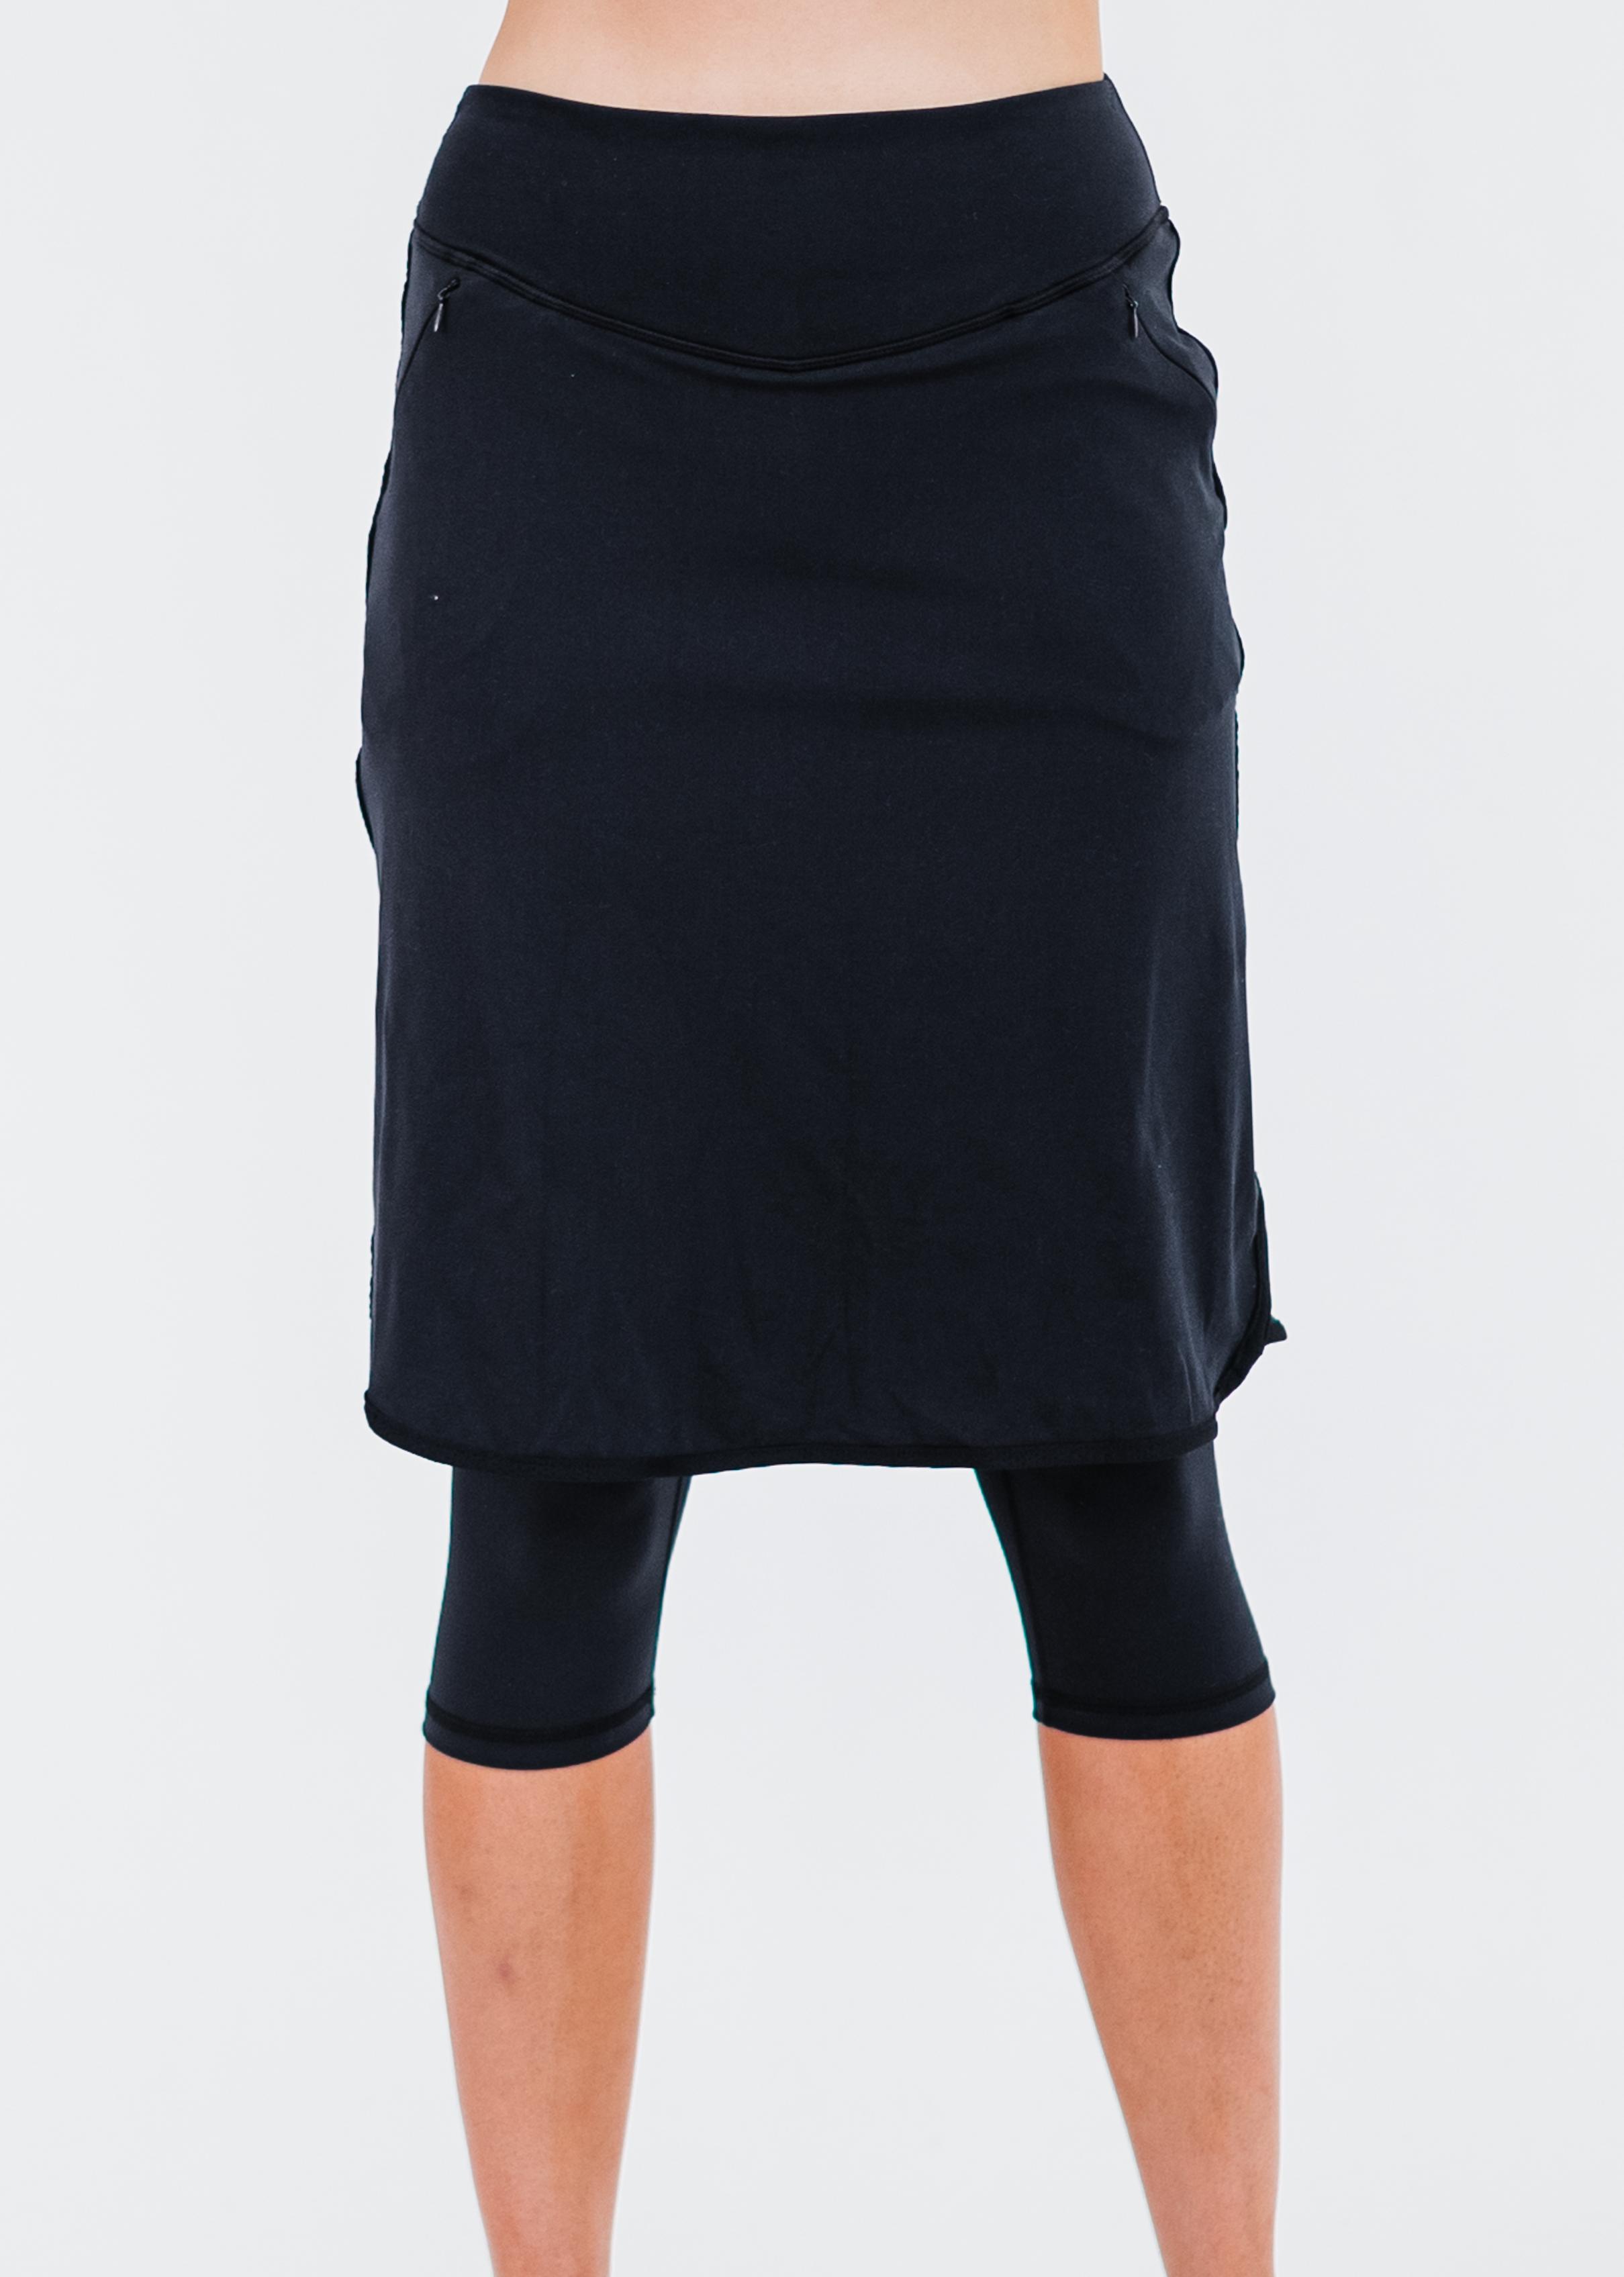 Amazon.com: LANREN 1 pcs Women's Casual Skirt Leggings Tennis Pants Sports  Fitness Culottes Gym Yoga Pants (Color : Black, Size : X-Large) : Clothing,  Shoes & Jewelry